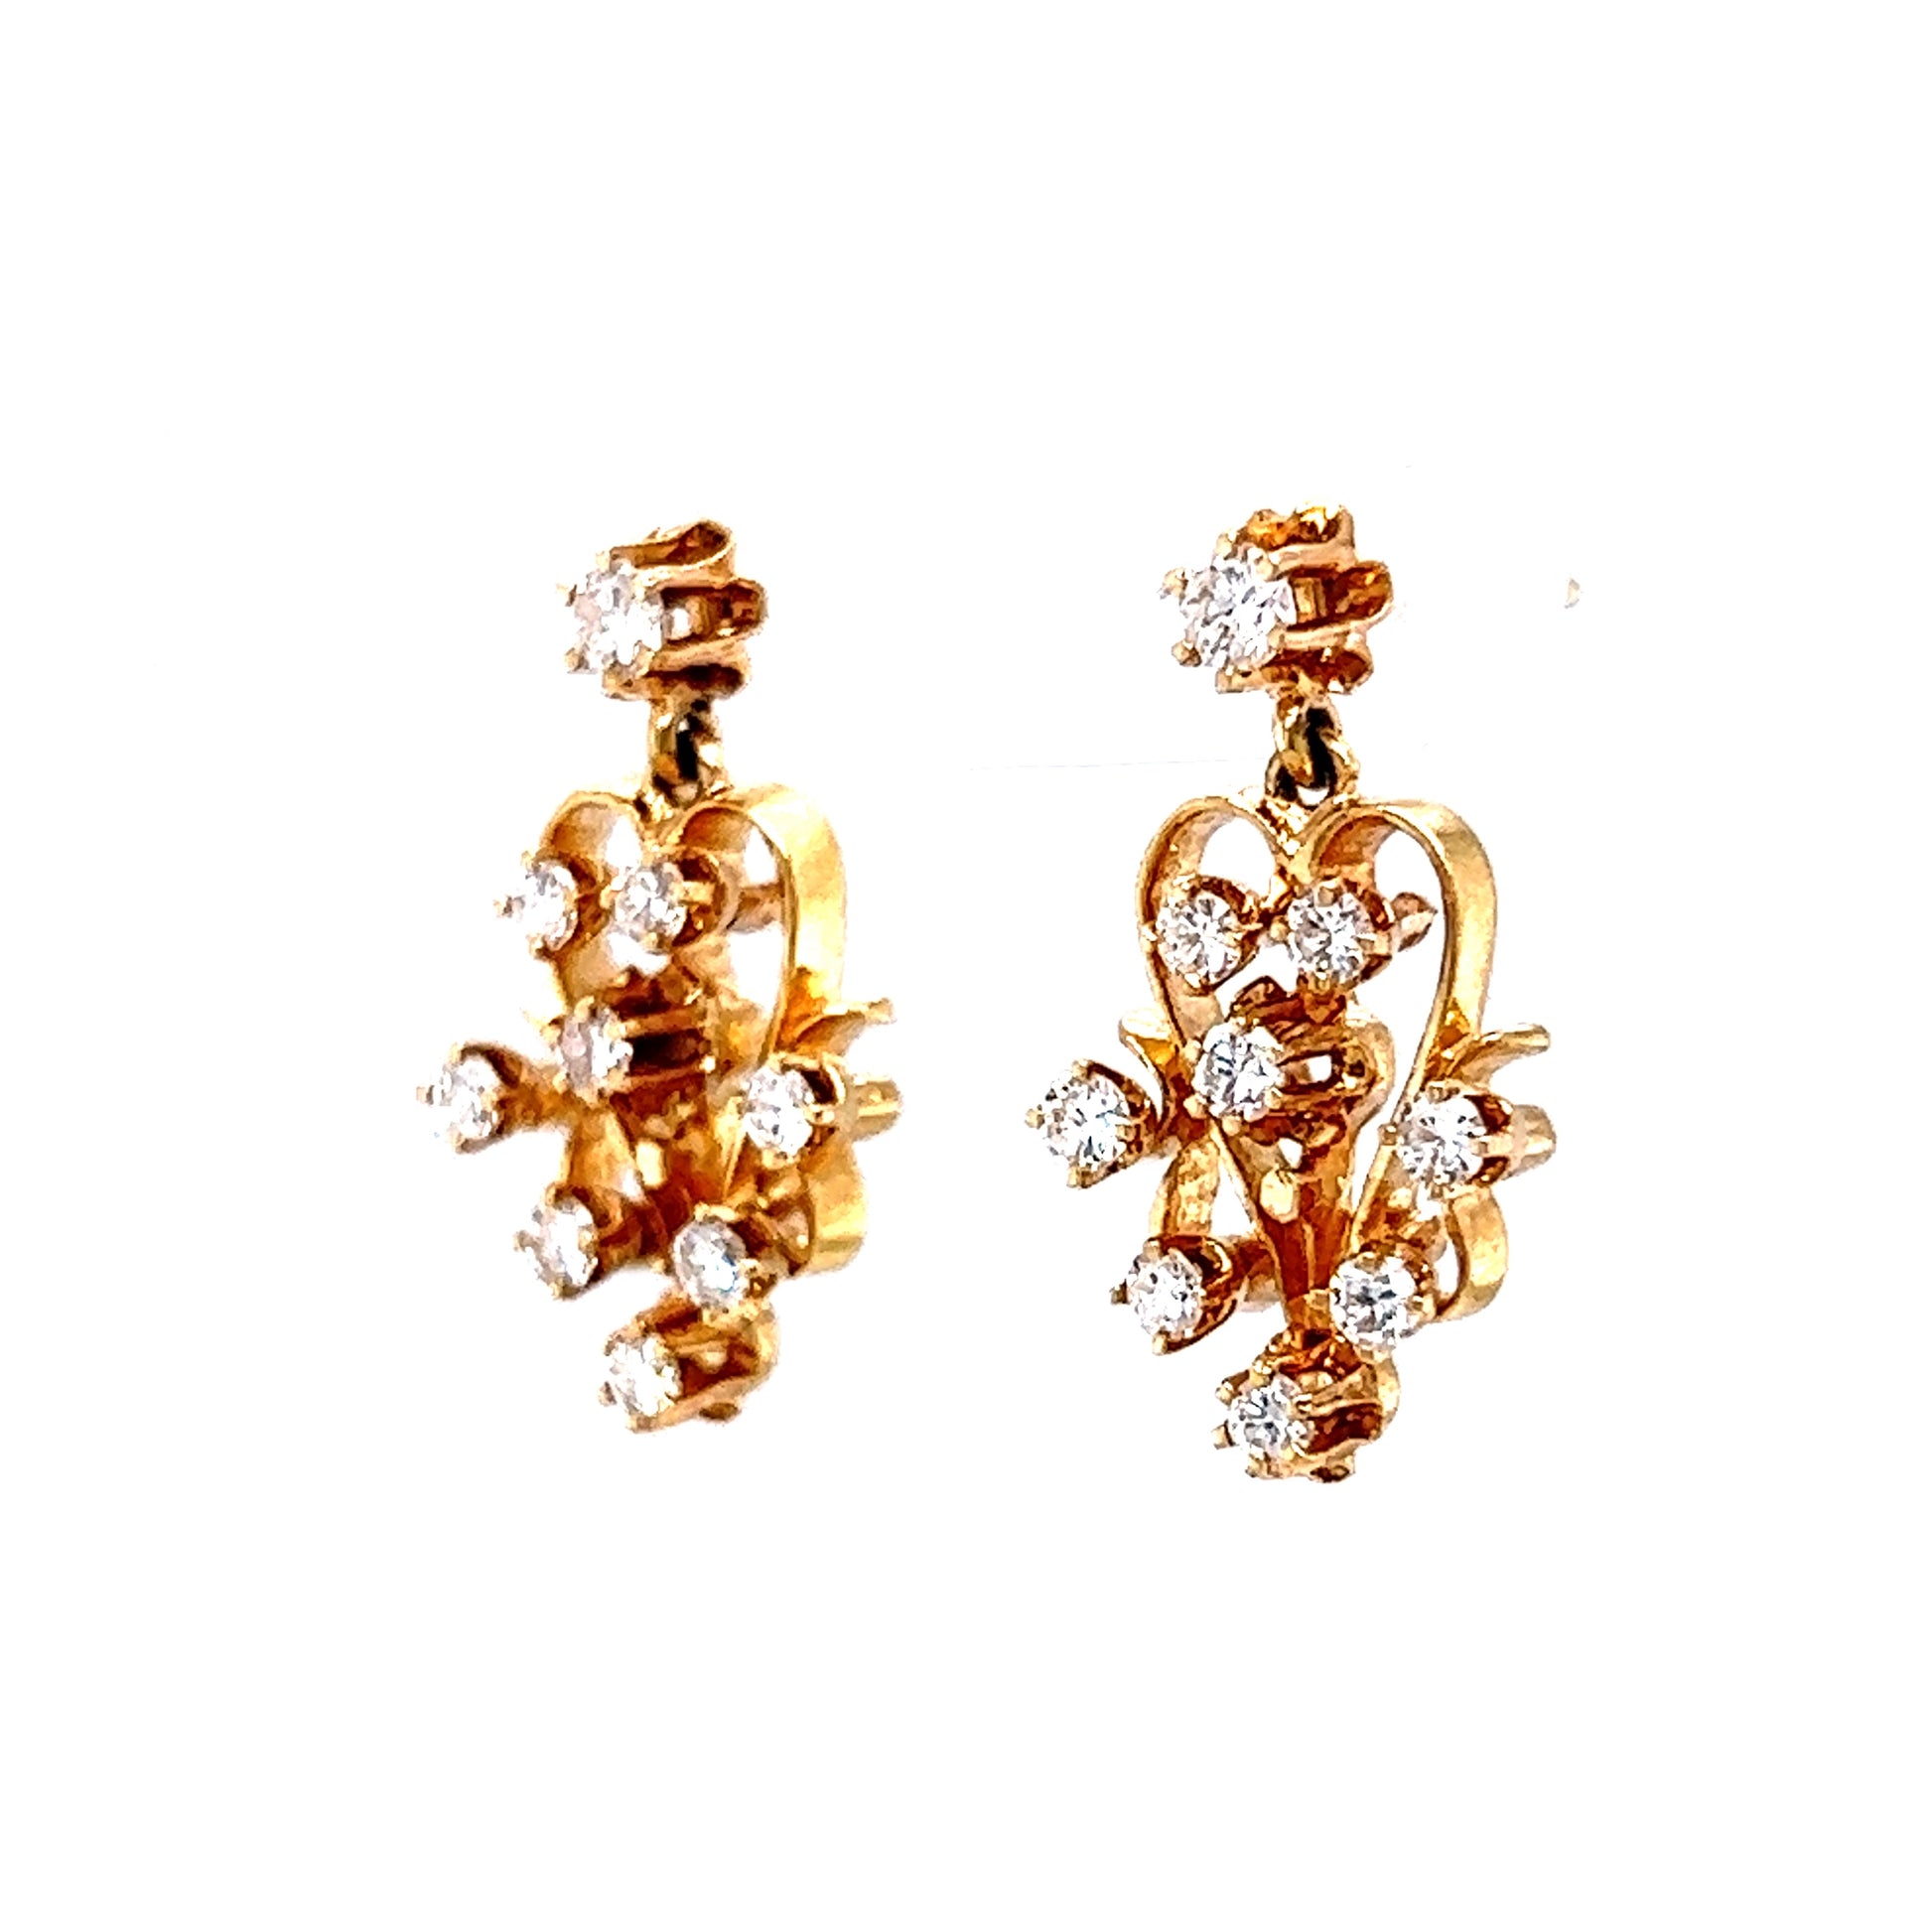 Ornate Diamond Drop Earrings in 14K Yellow GoldComposition: 14 Karat Yellow Gold Total Diamond Weight: .64ct Total Gram Weight: 4.8 g Inscription: 14k
      